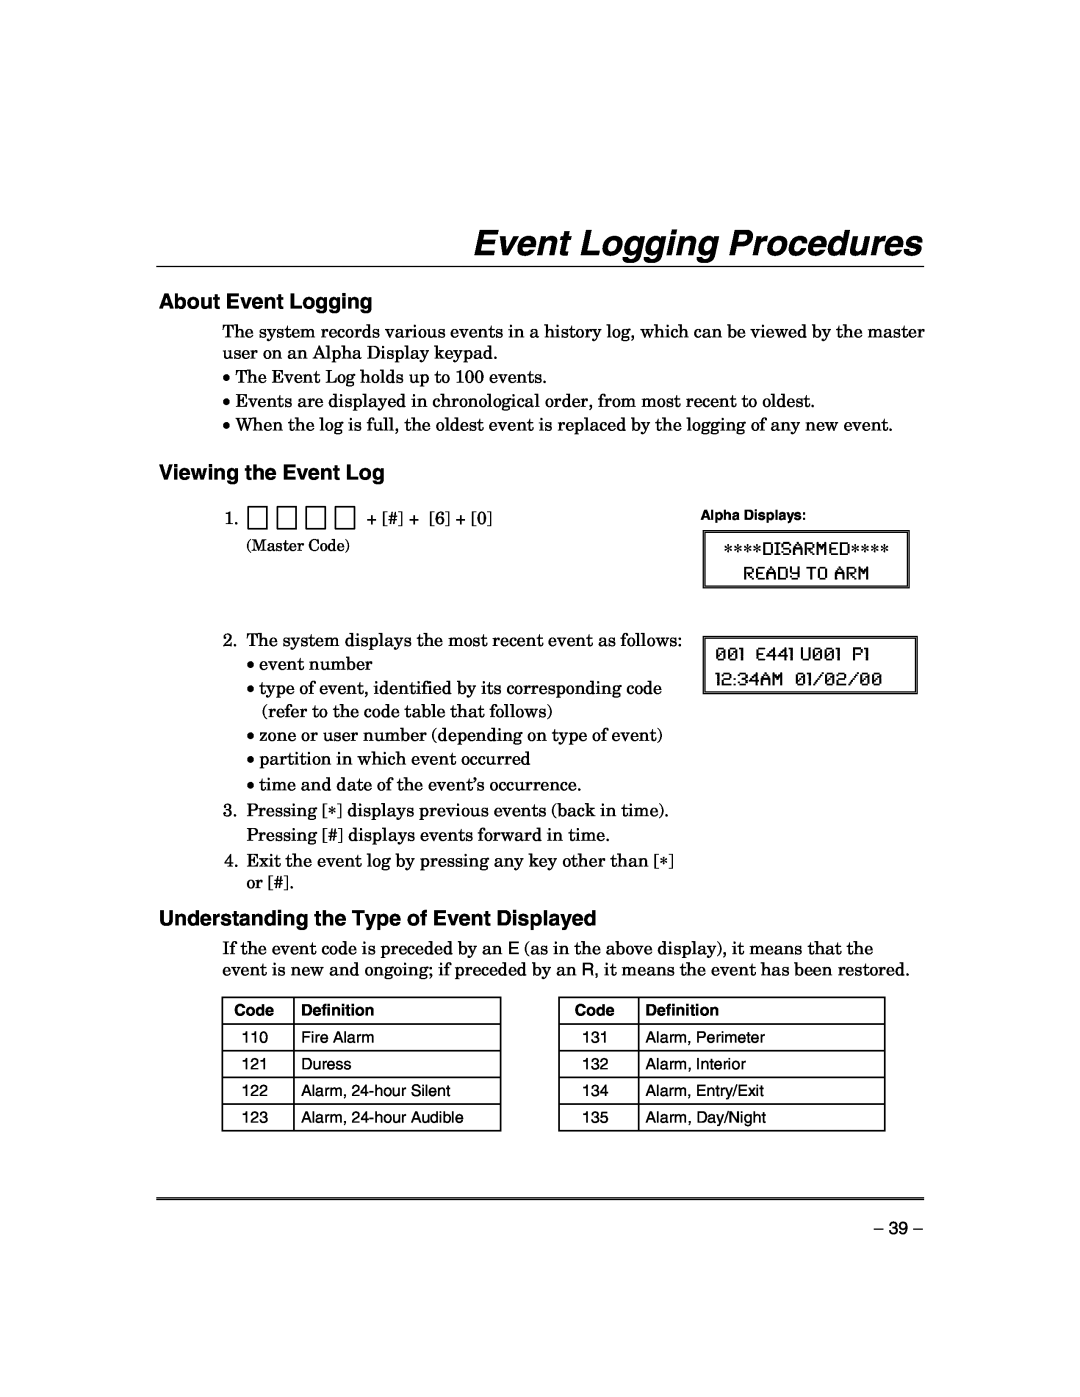 Honeywell VISTA-21IPSIA manual Event Logging Procedures, About Event Logging, Viewing the Event Log 